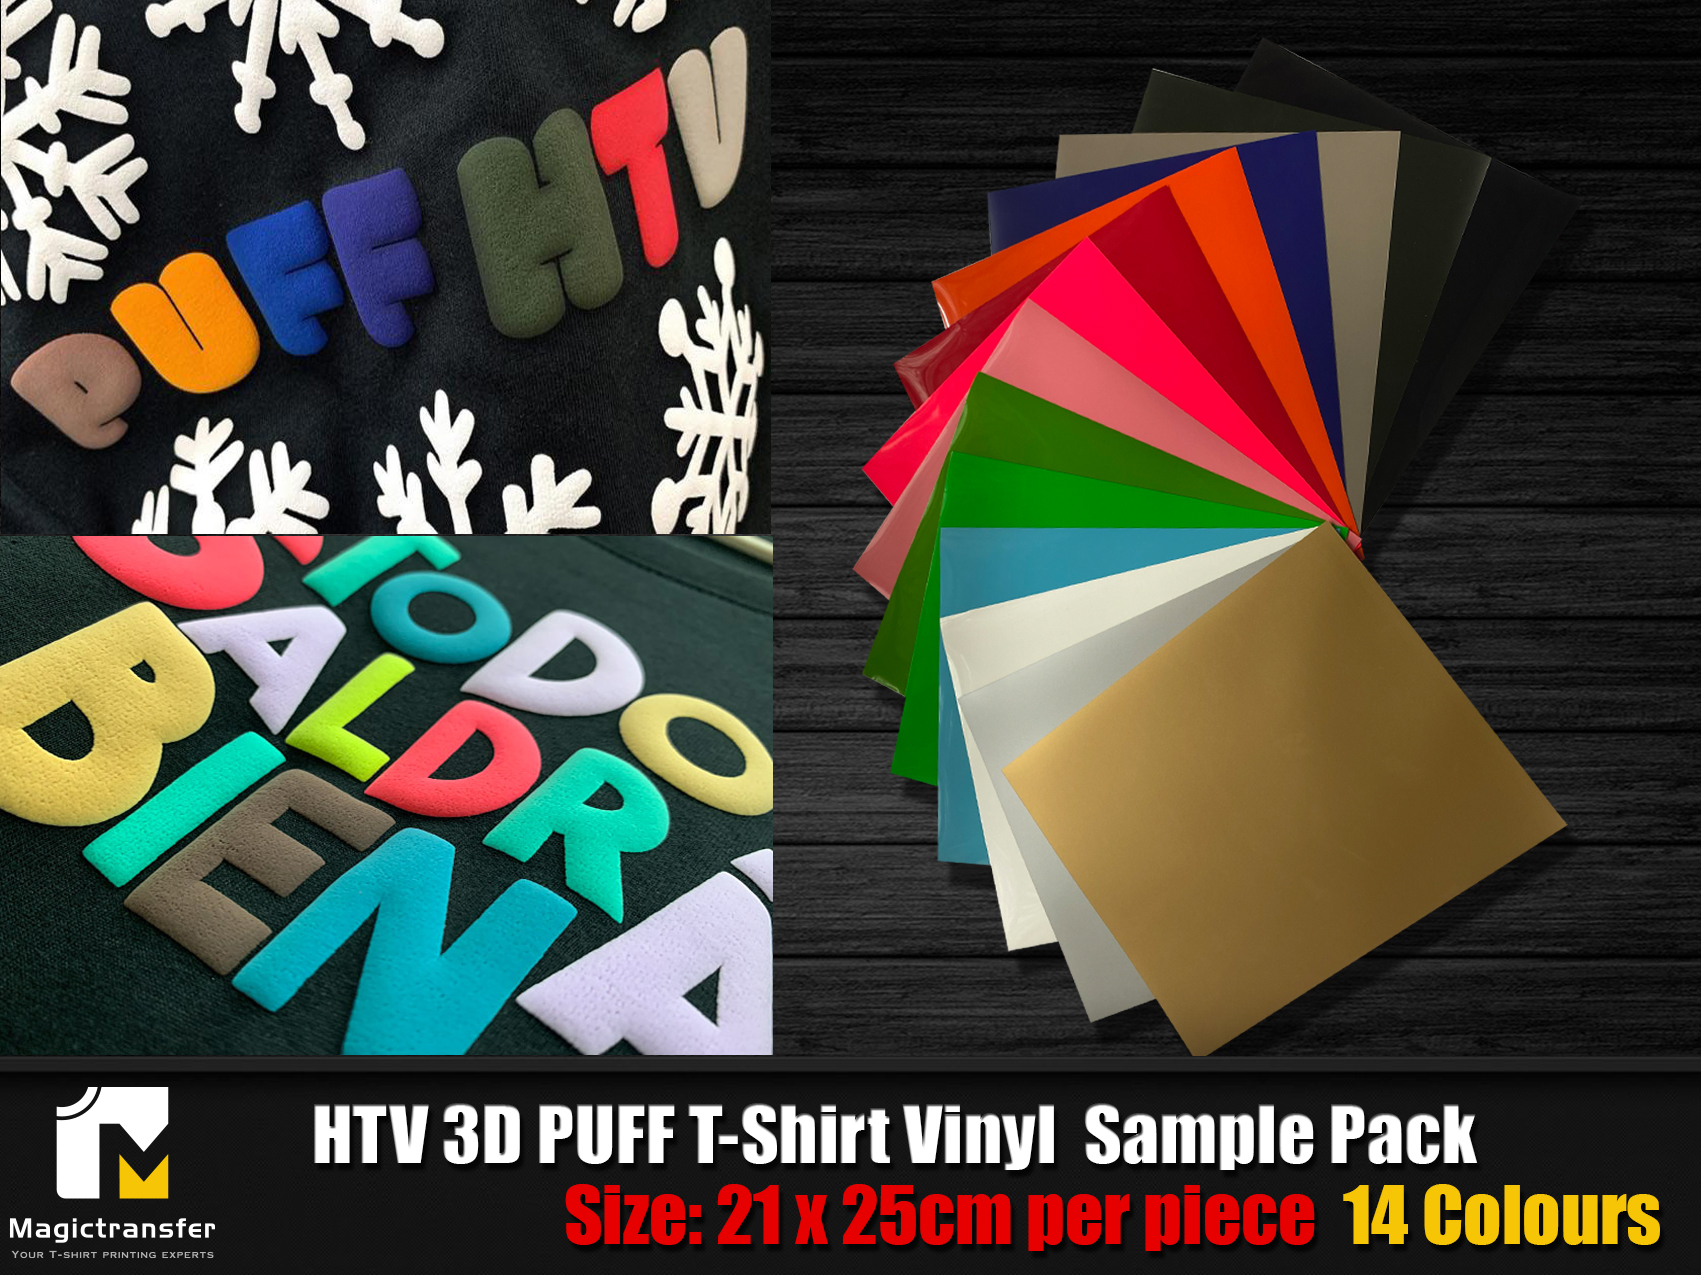 HTV 3D PUFF PU Garment vinyl sample pack.